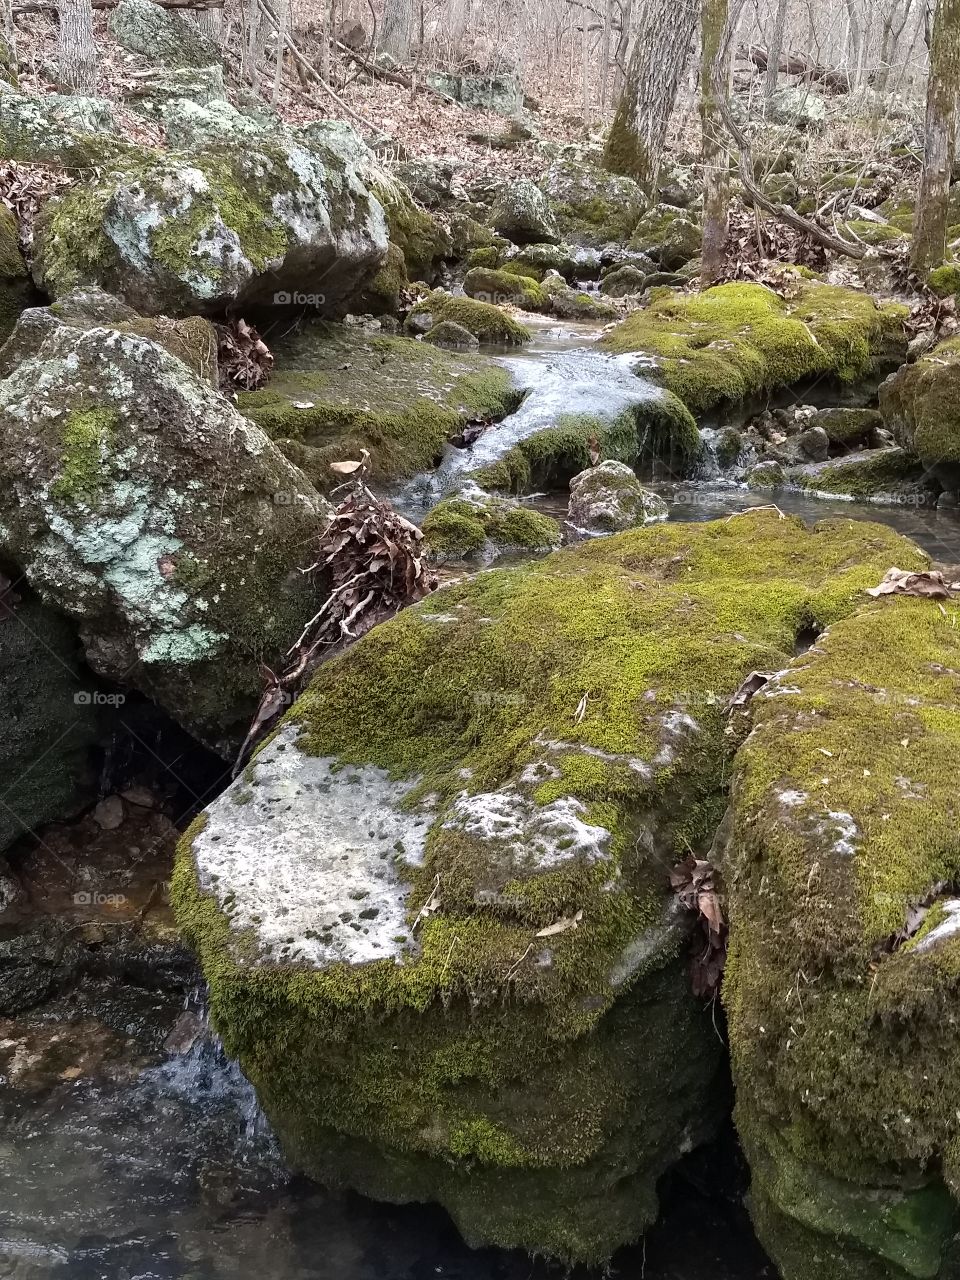 mossy rocks on a hiking trail in Missouri